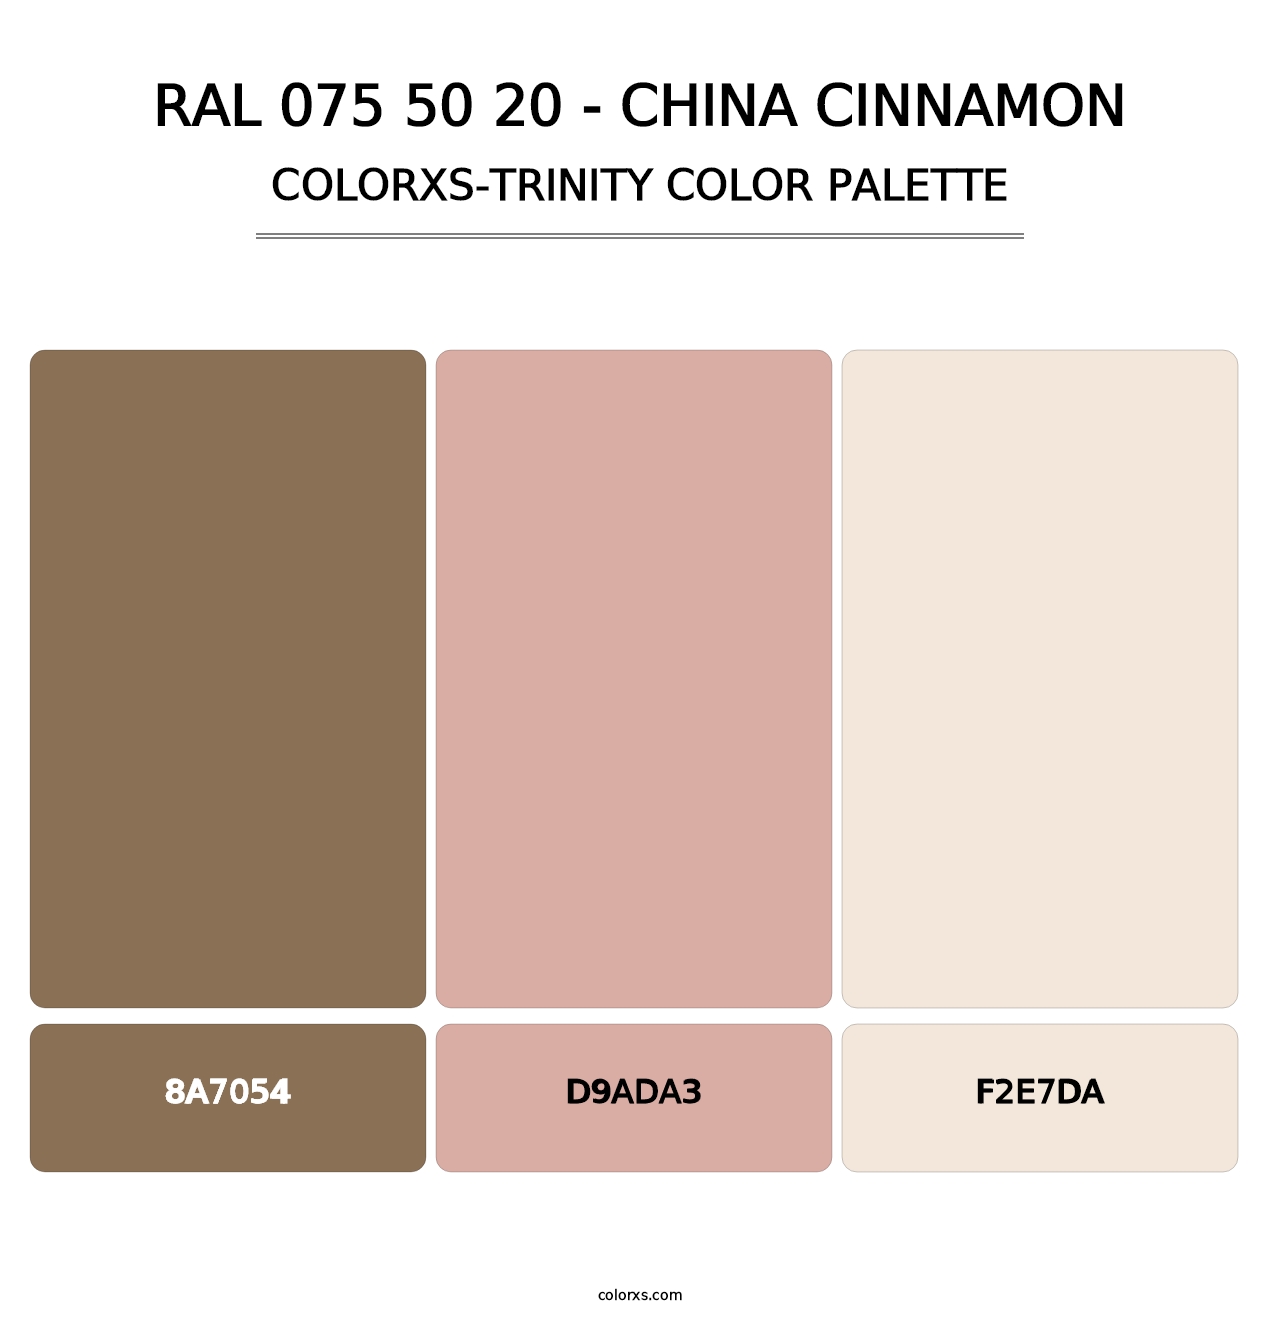 RAL 075 50 20 - China Cinnamon - Colorxs Trinity Palette